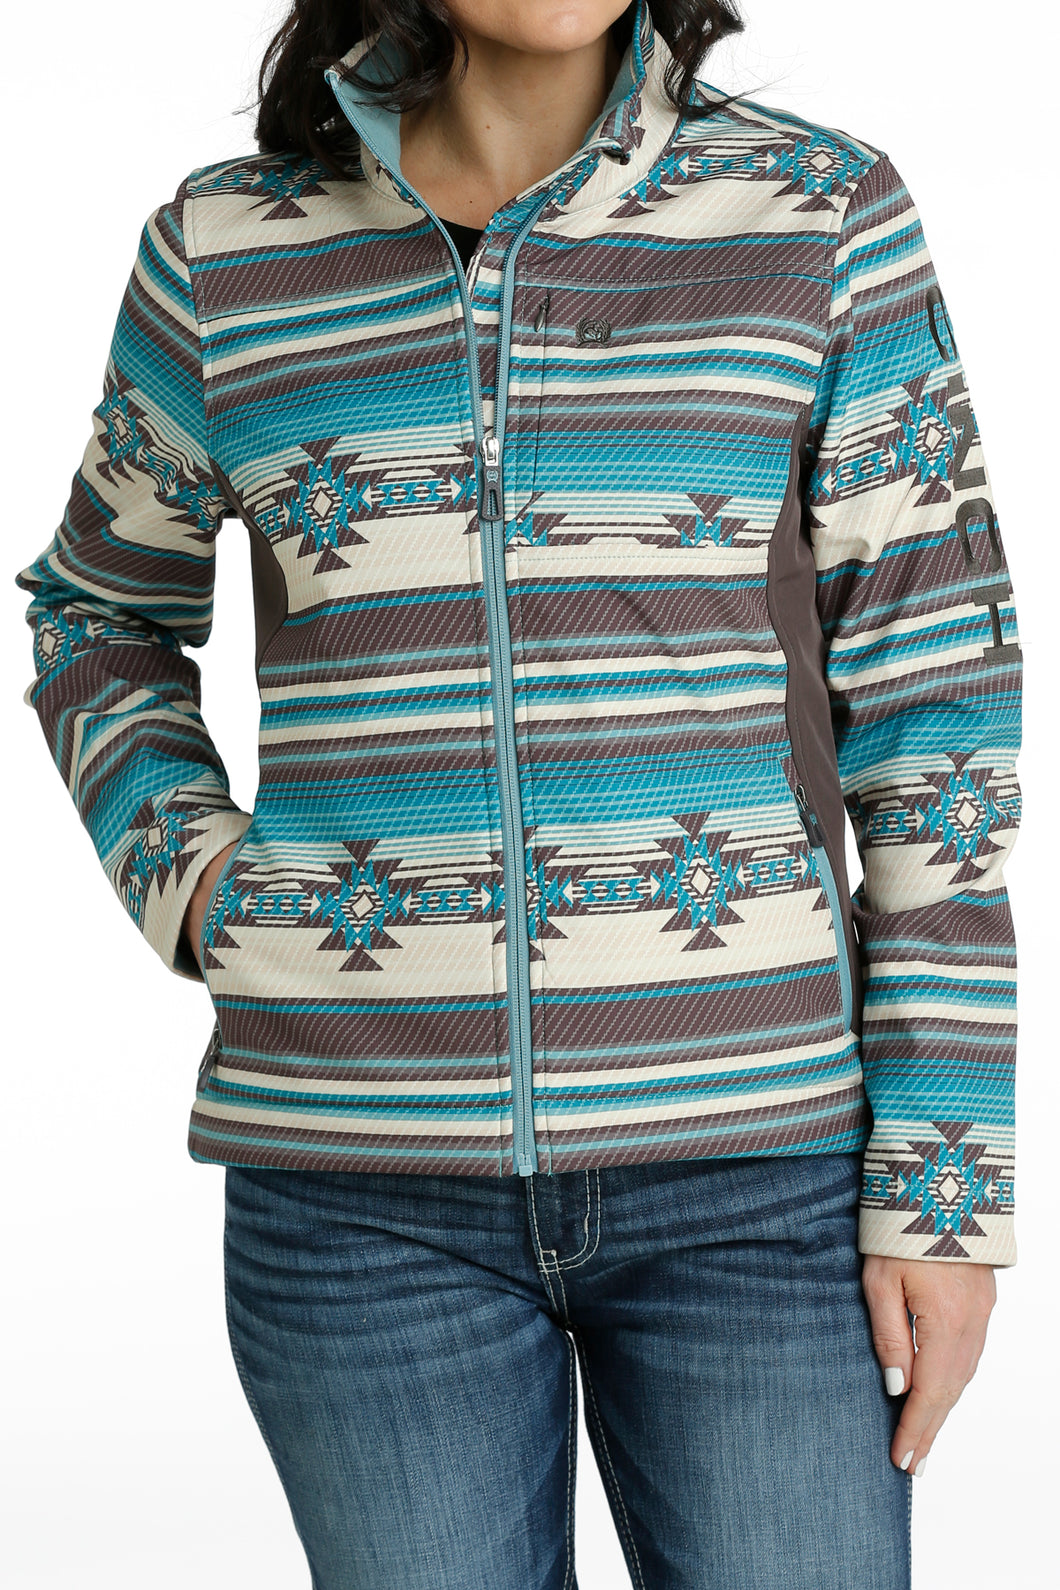 Cinch Ladies Turquoise/Grey Aztec Stripe Bonded Conceal Carry Jacket